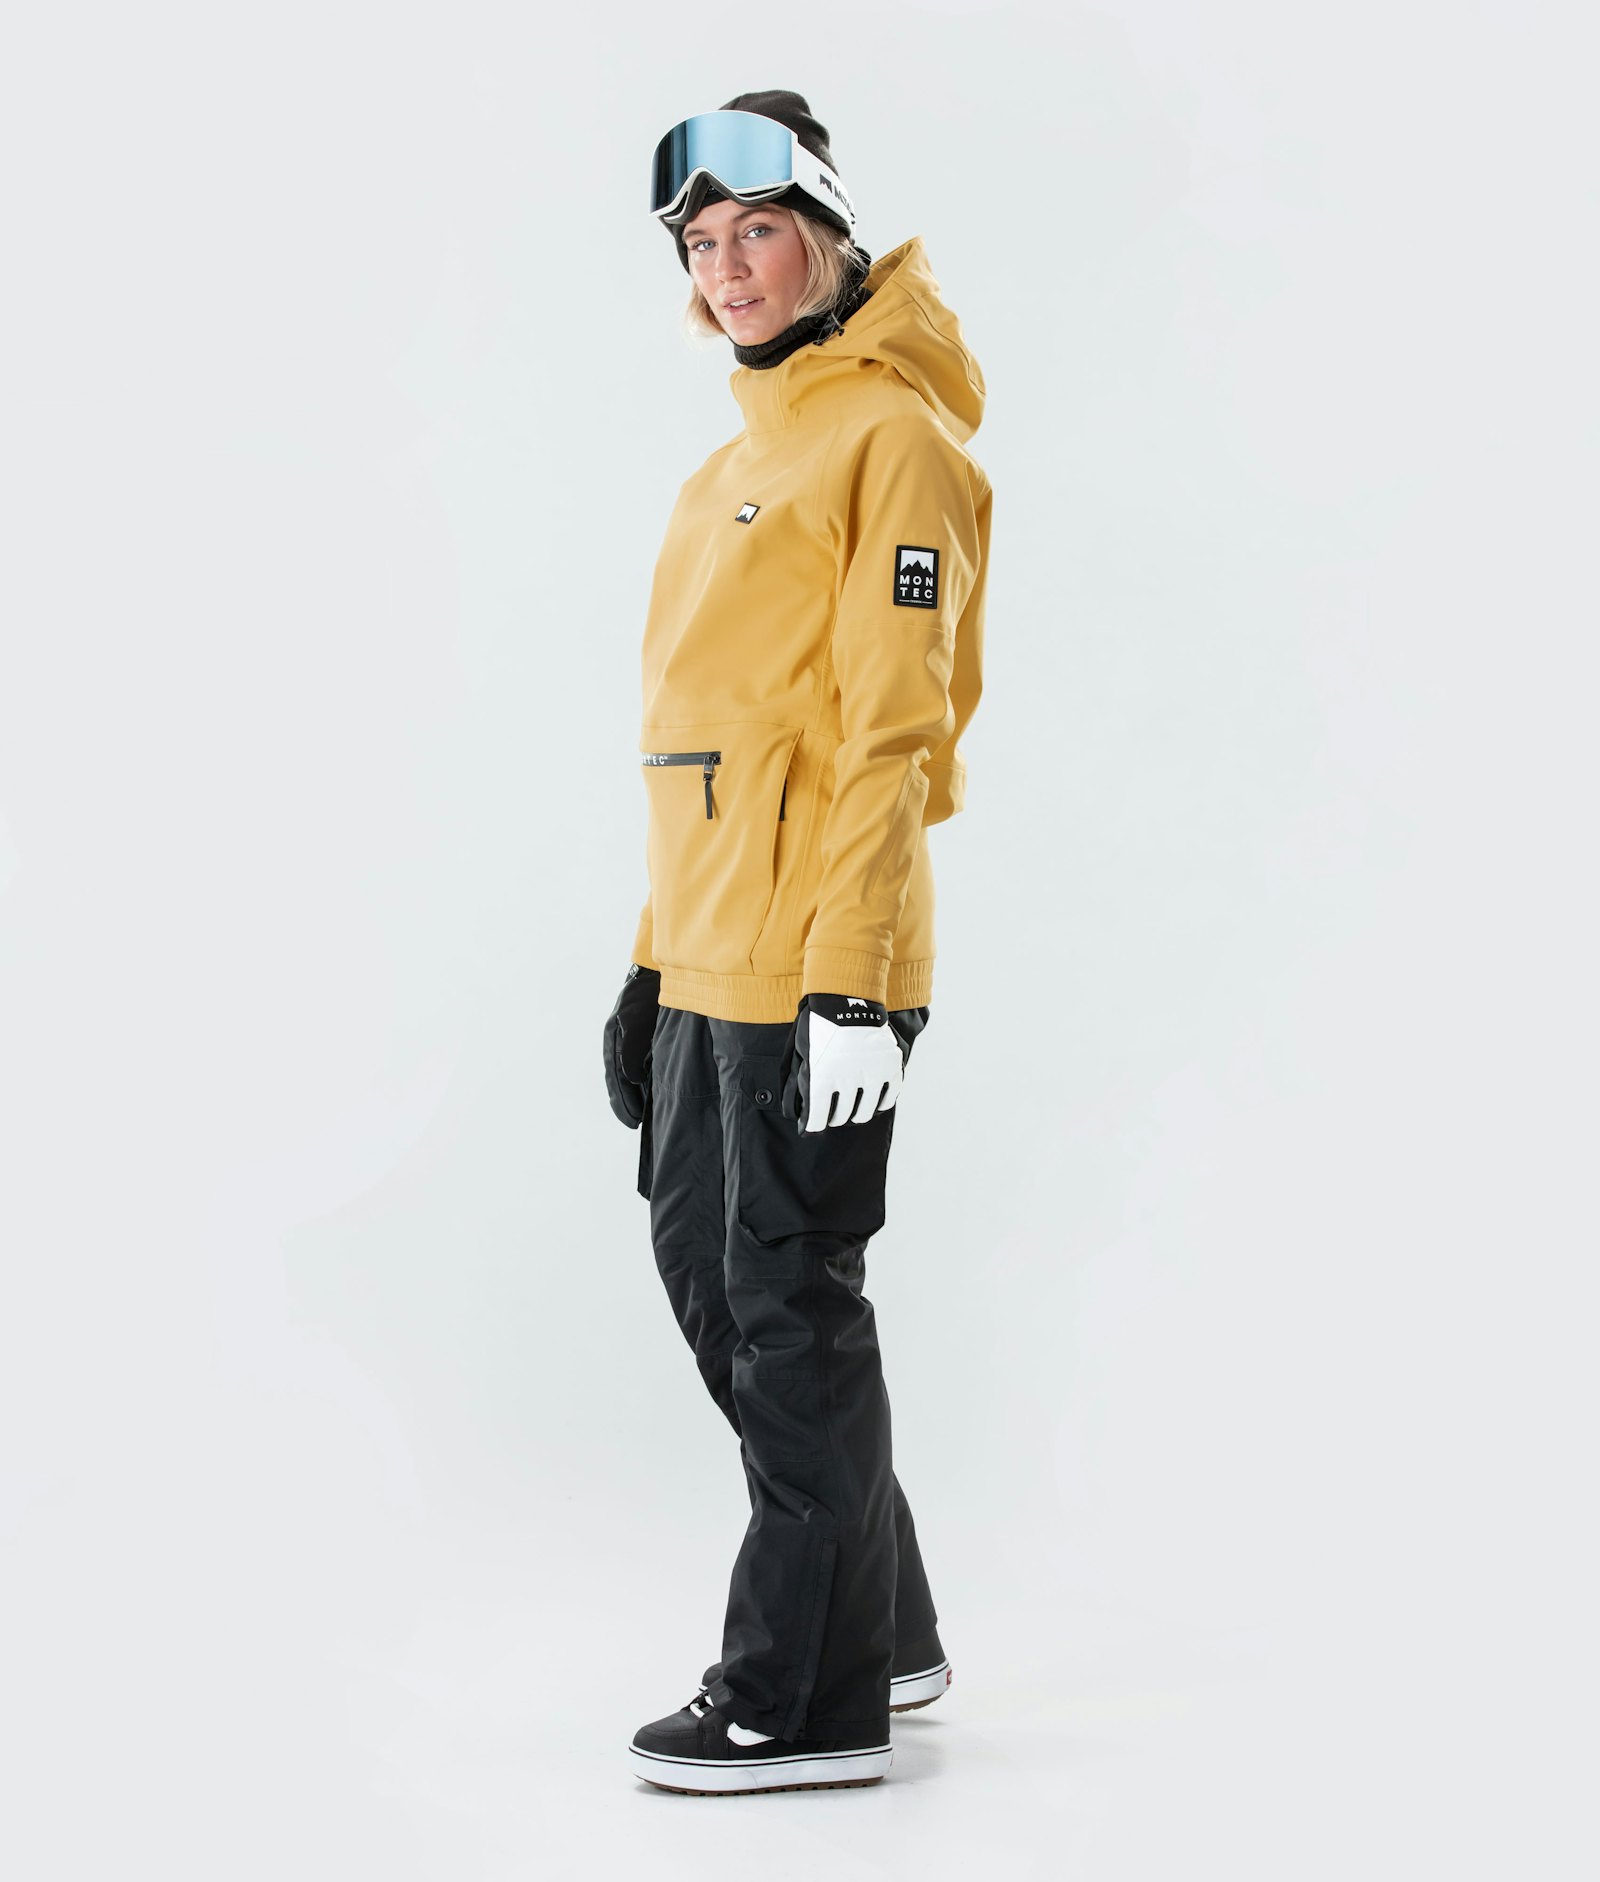 Tempest W 2020 Veste Snowboard Femme Yellow